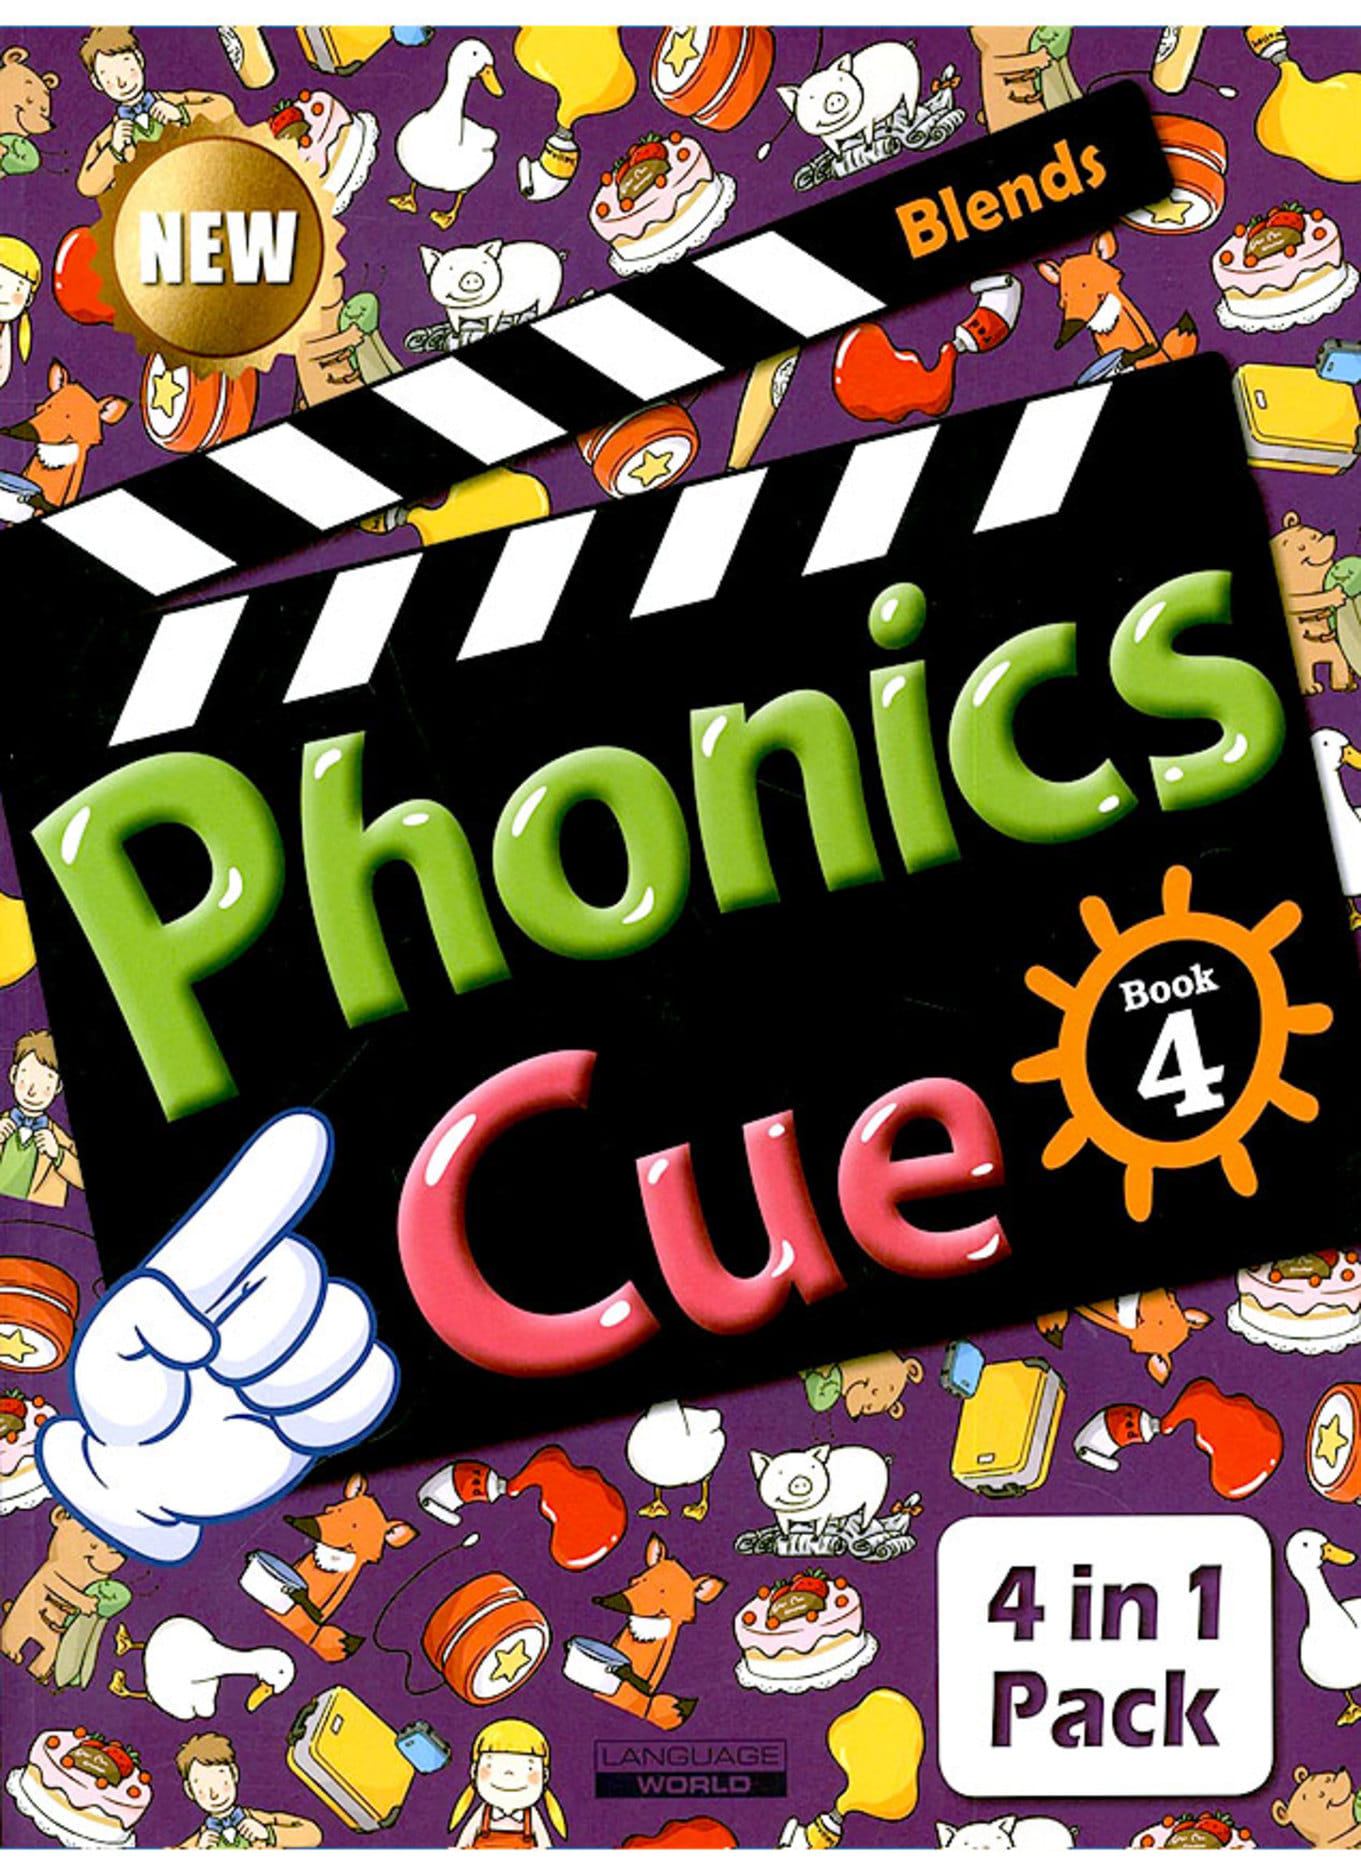 [Language World] Phonics Cue set 1~4